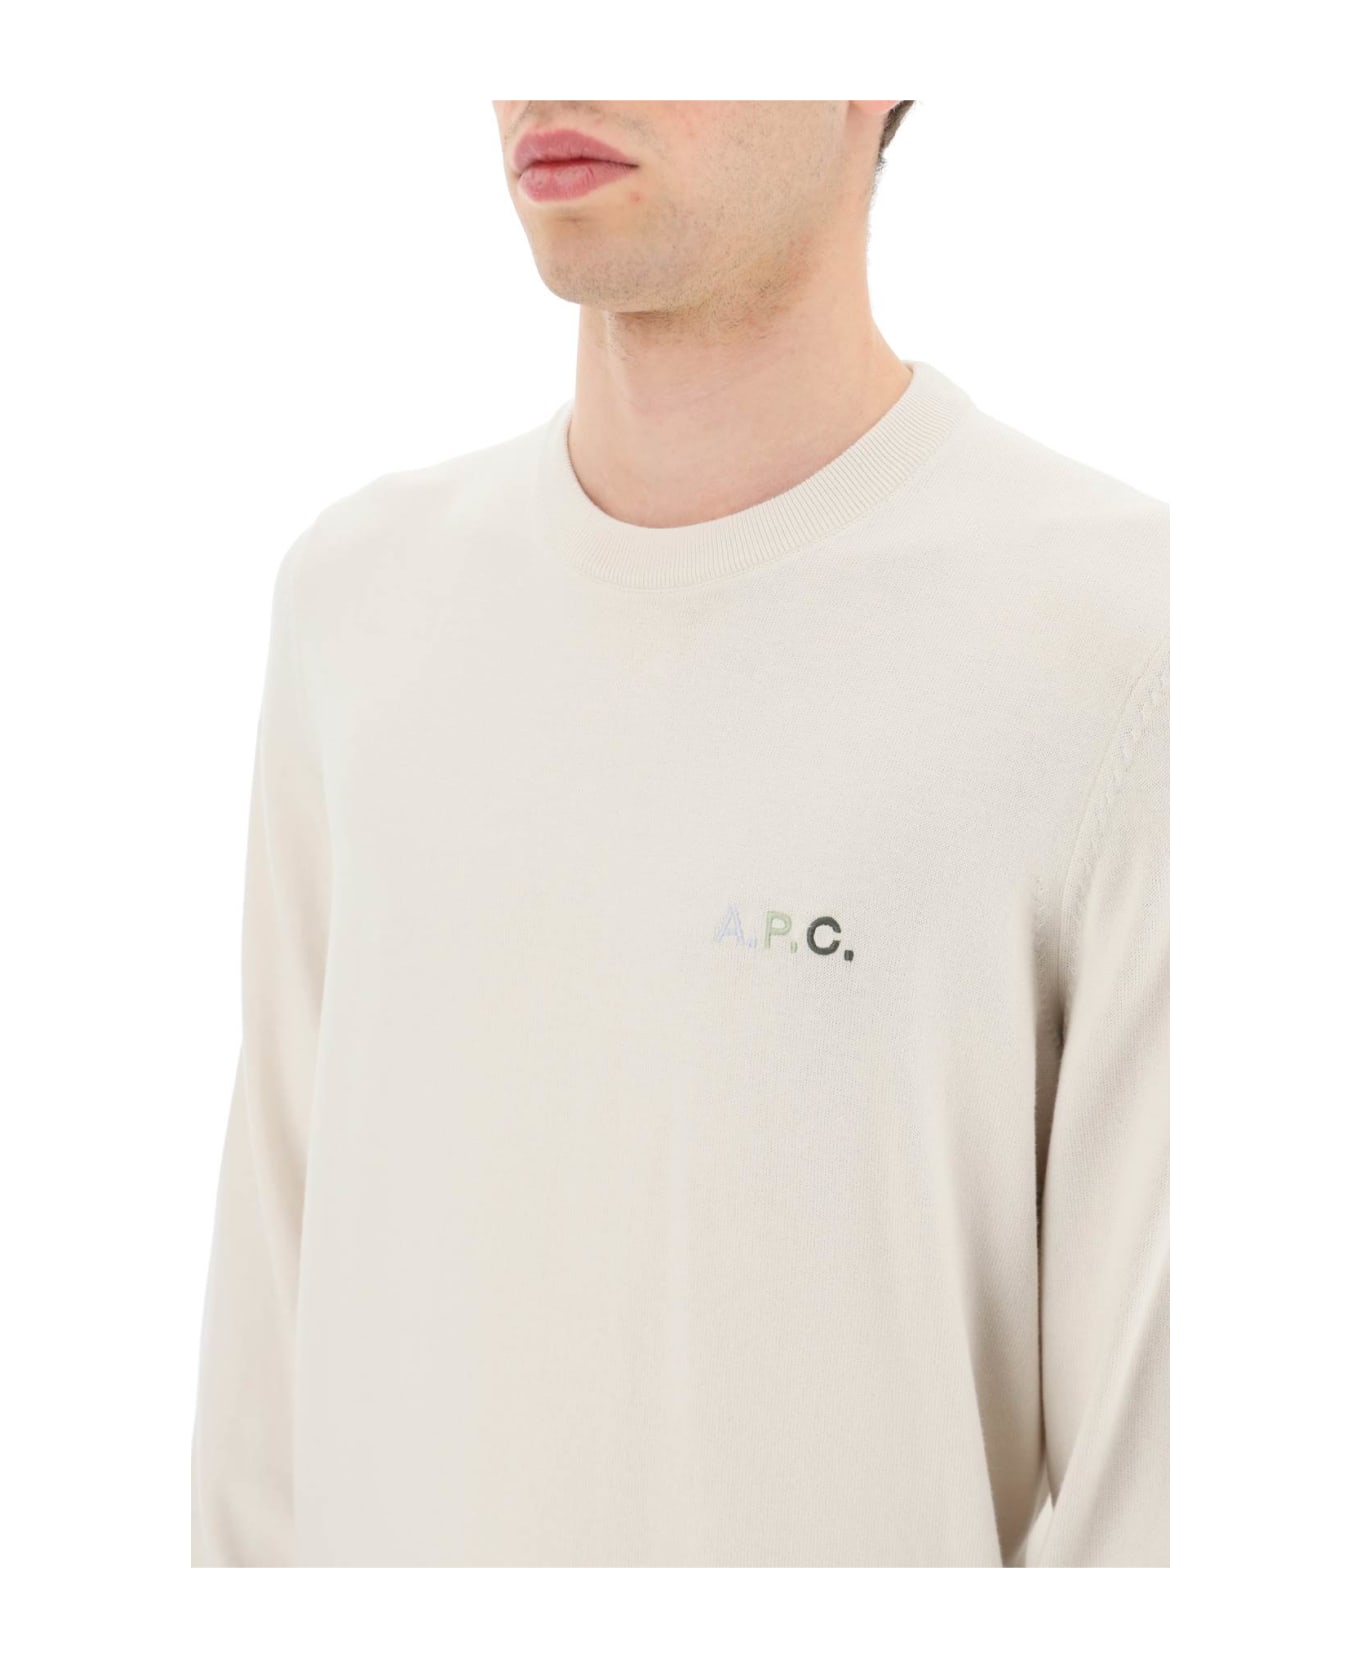 A.P.C. Grey Crewneck Sweater With Mini Logo - Beige